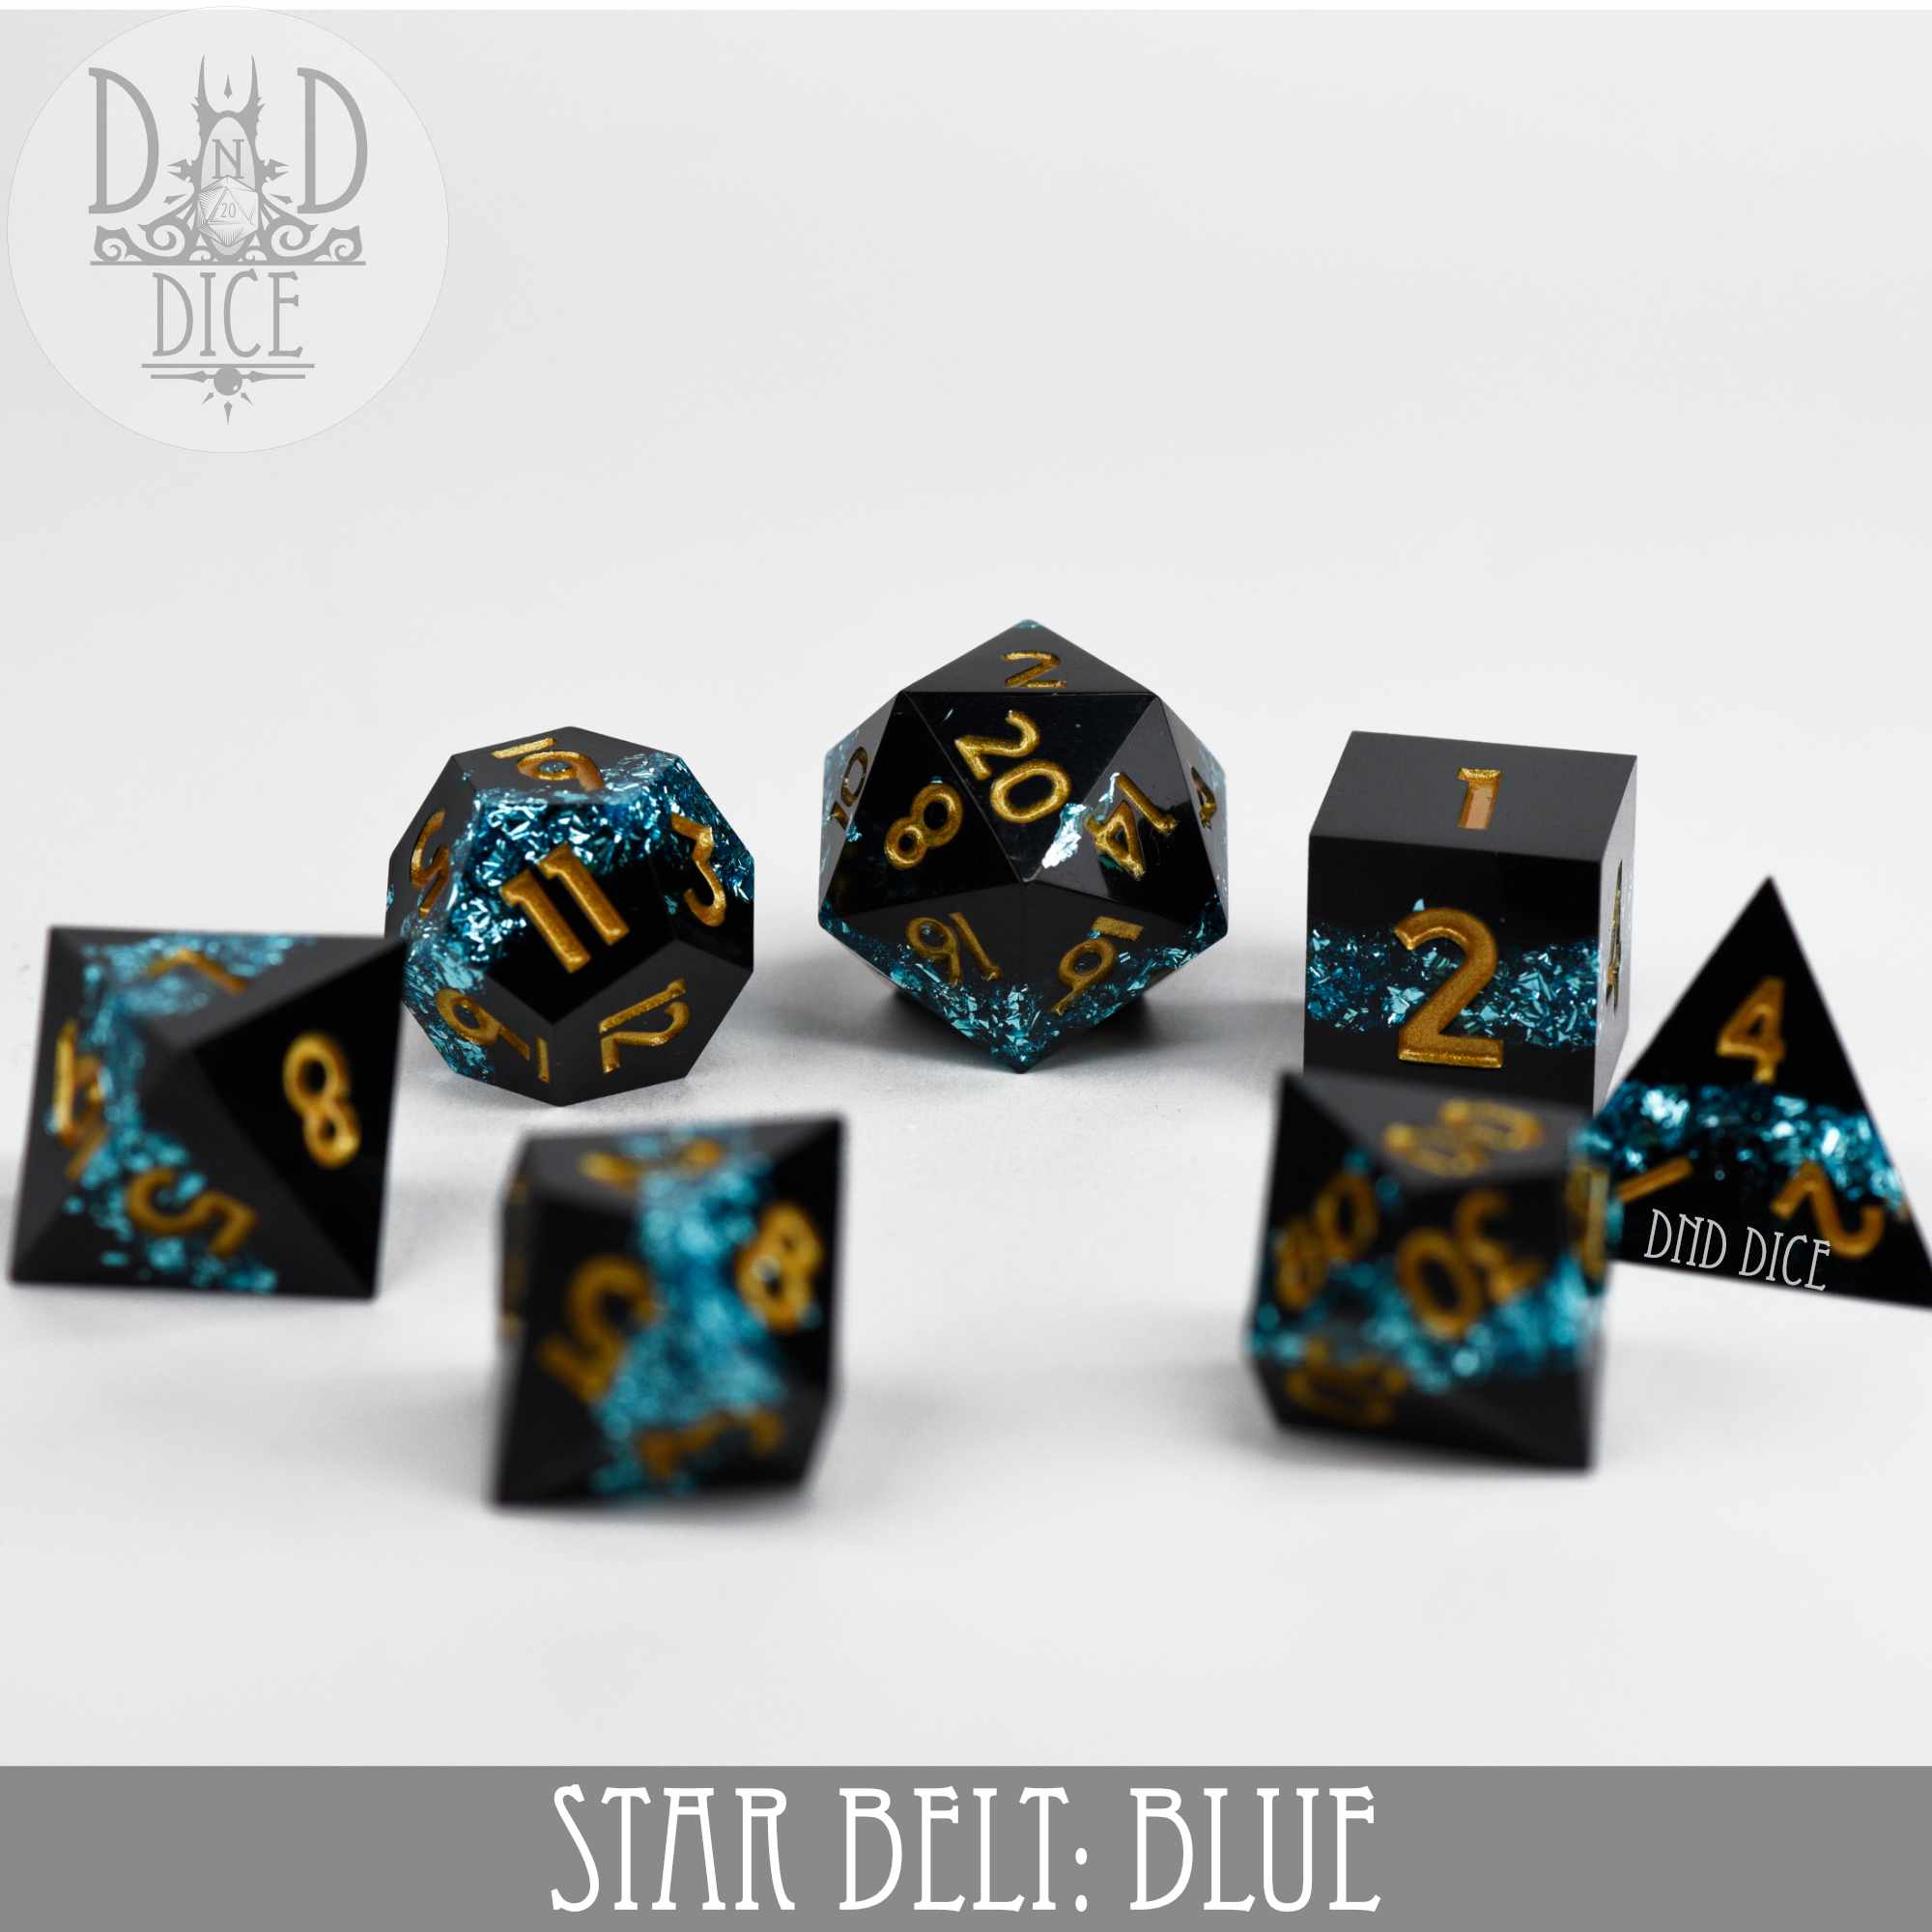 Star Belt: Blue Handmade Dice Set